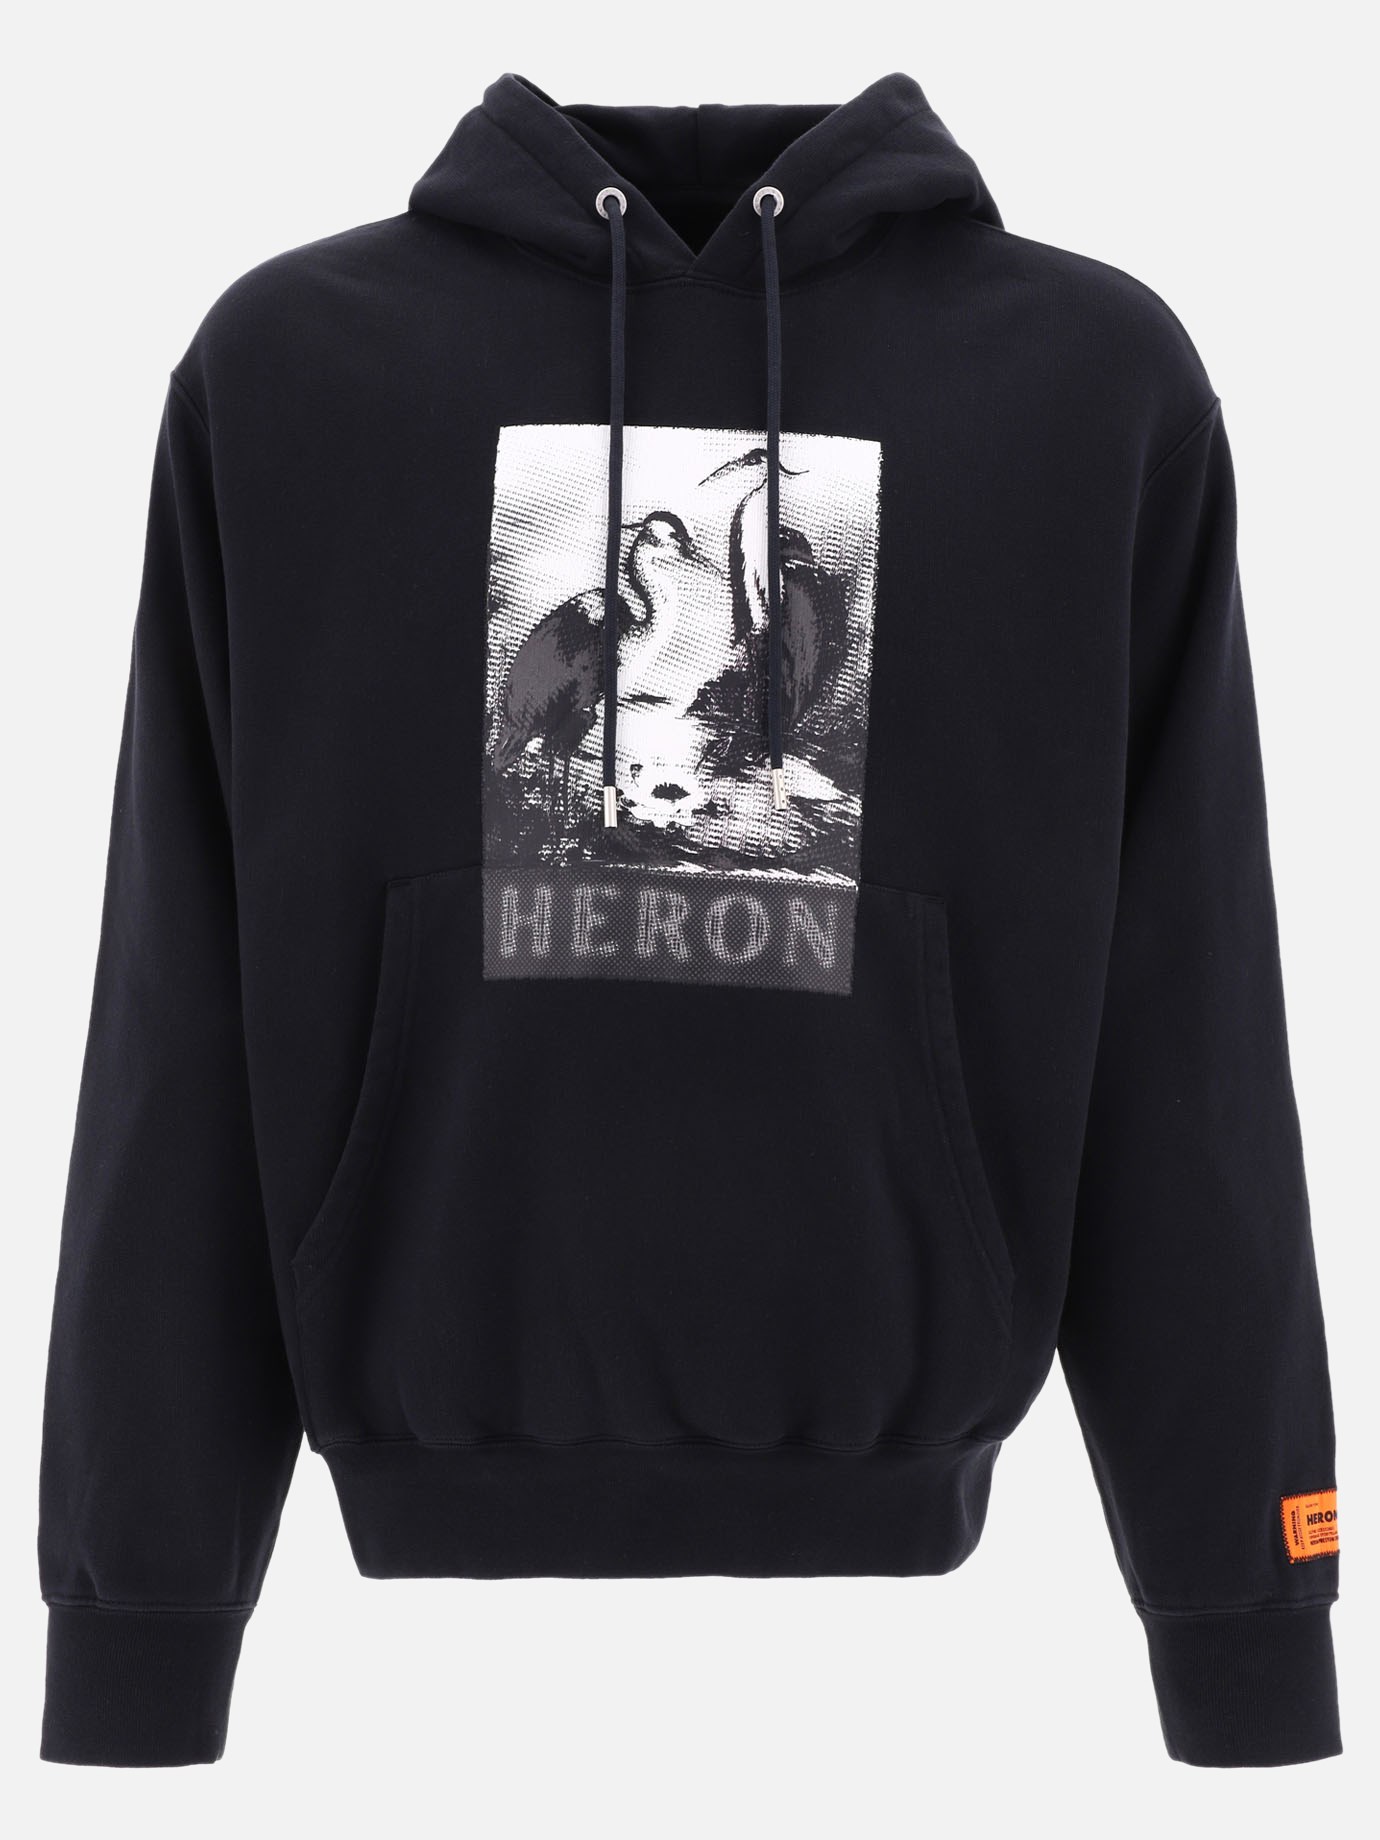  Halftone Heron  hoodieby Heron Preston - 1